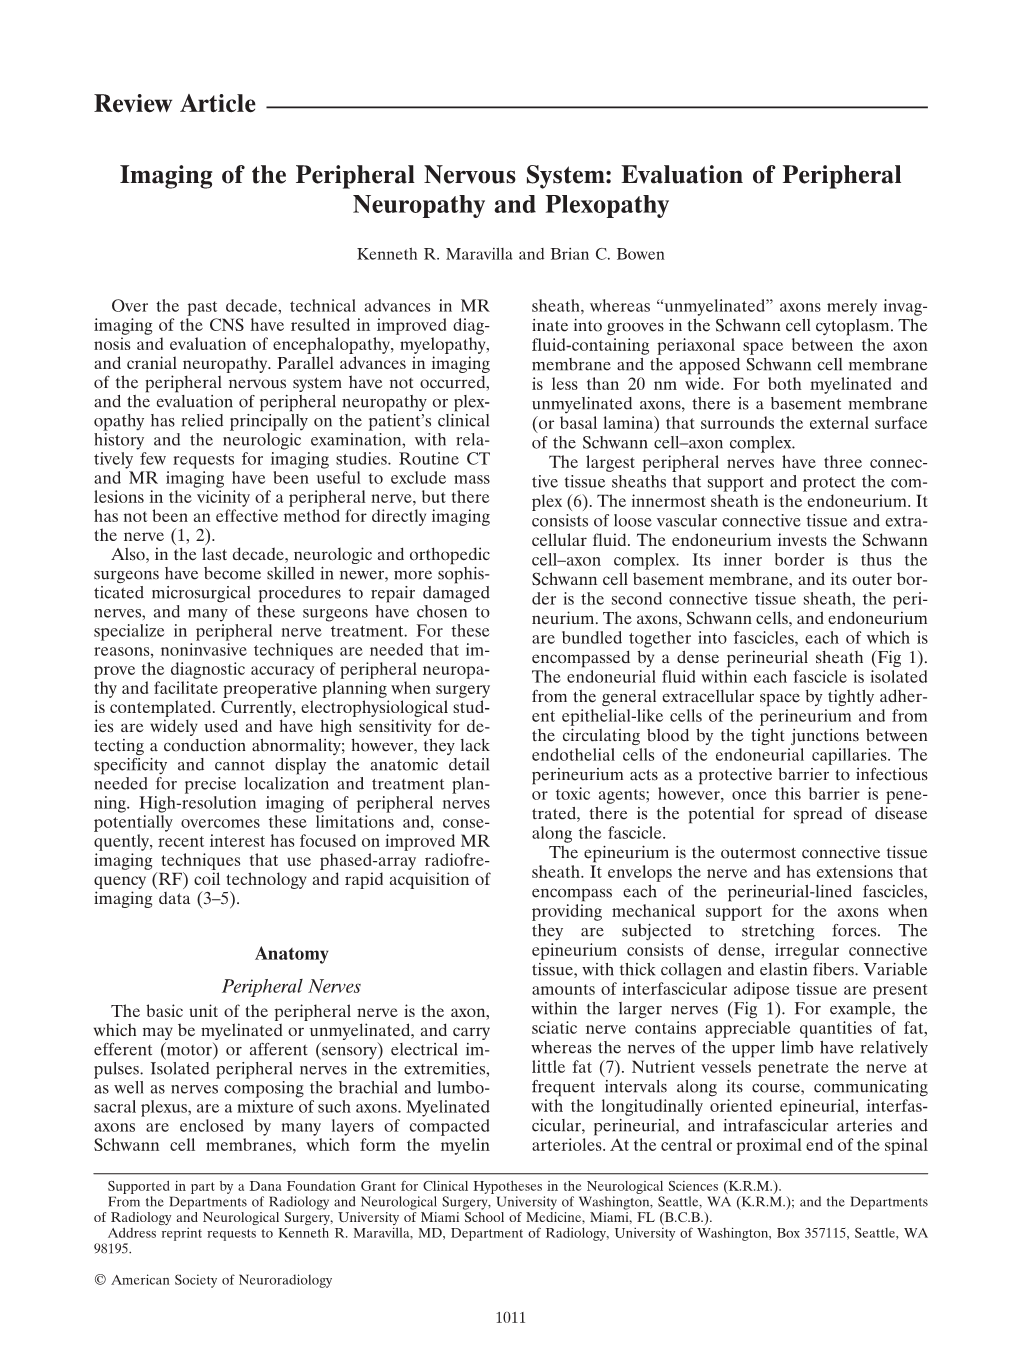 Evaluation of Peripheral Neuropathy and Plexopathy